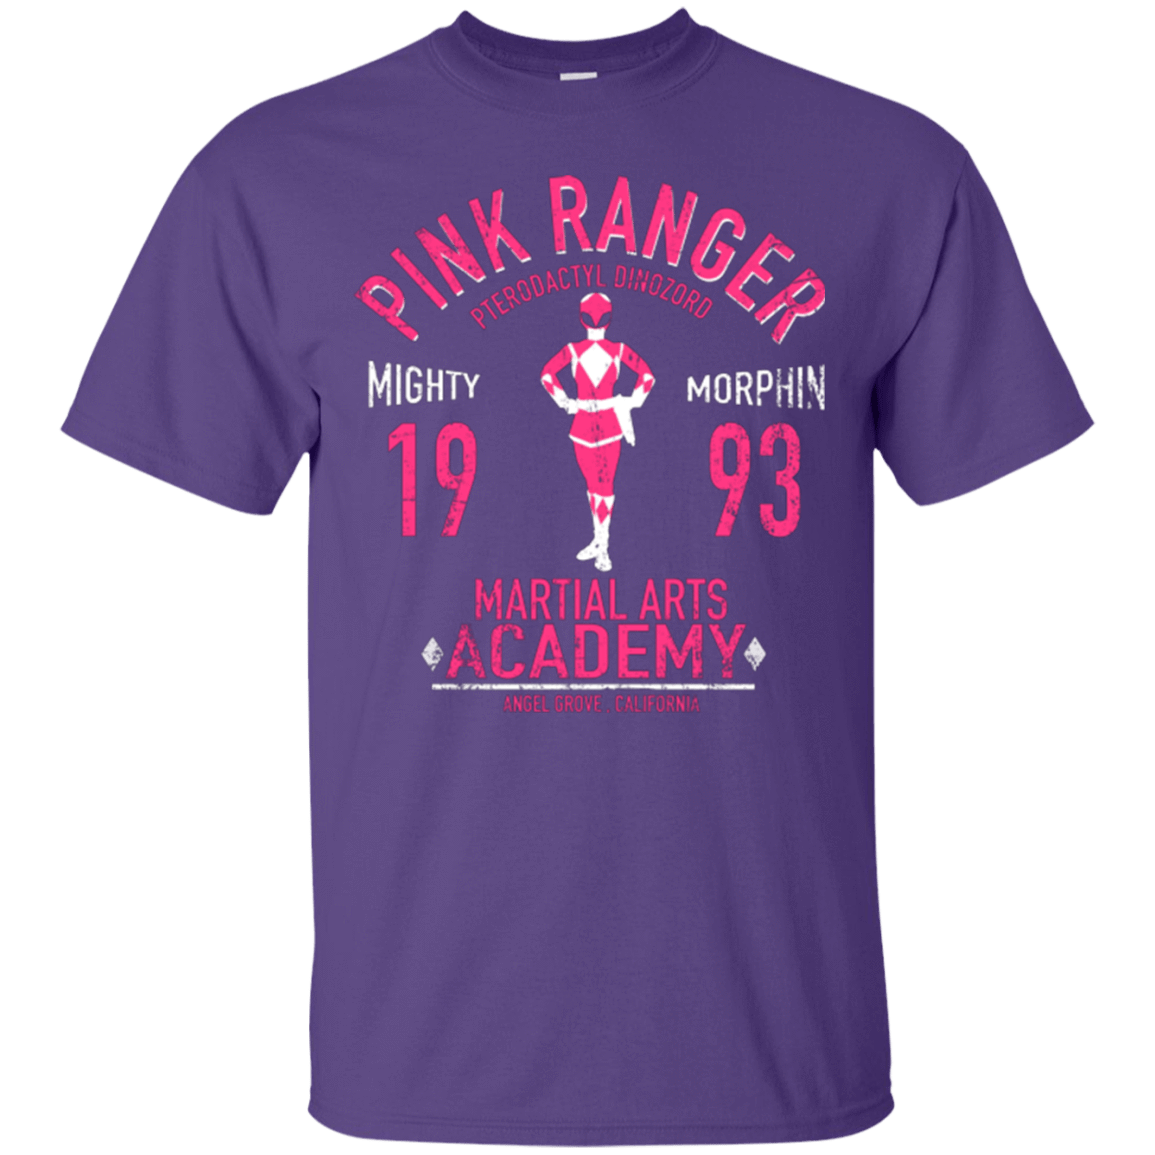 T-Shirts Purple / Small Pterodactyl Ranger T-Shirt